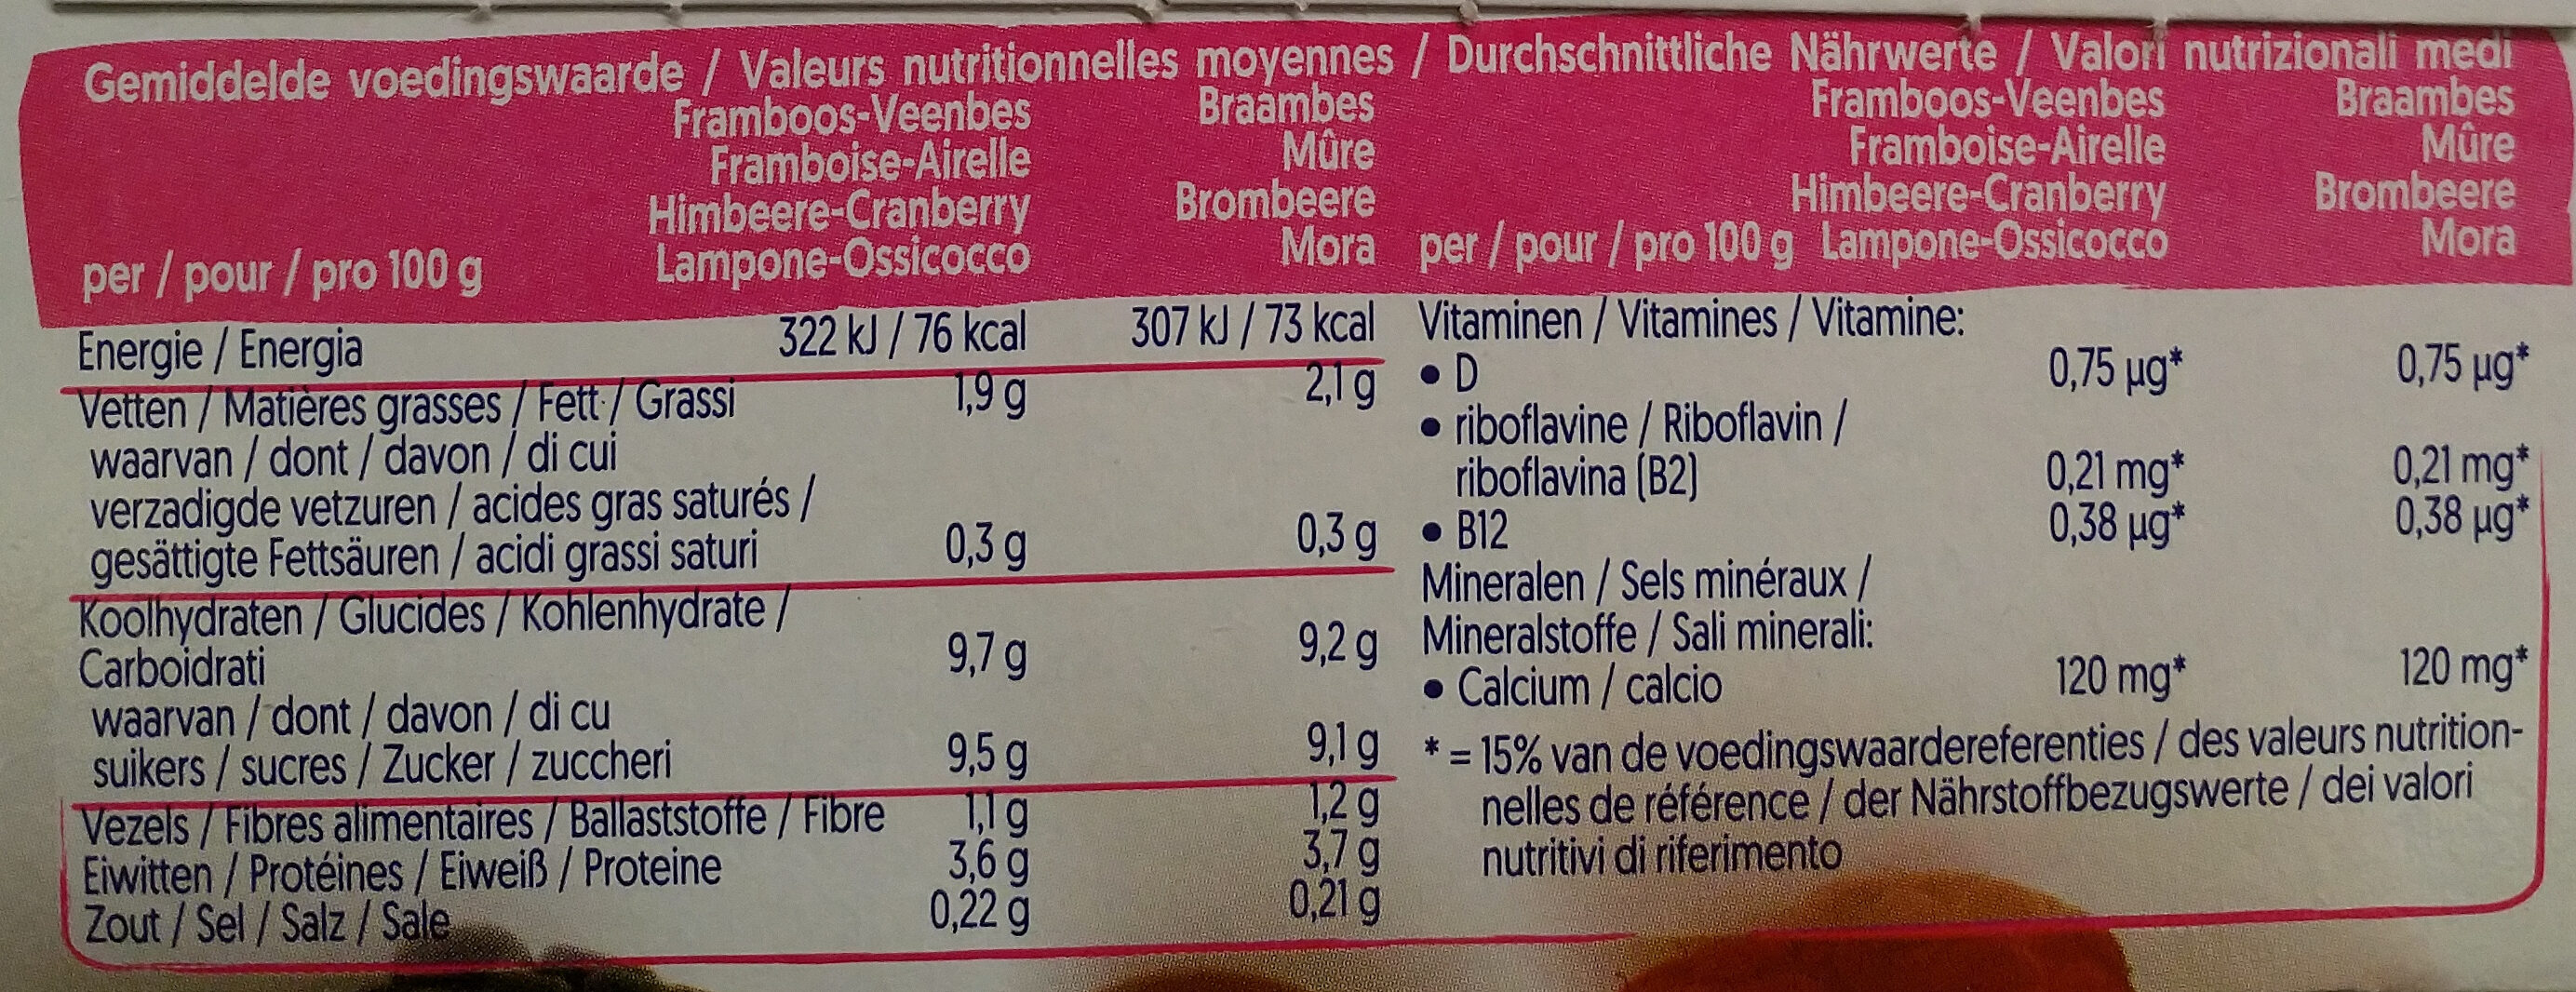 2x Framboise-Airelle, 2x Mûre - Nutrition facts - fr